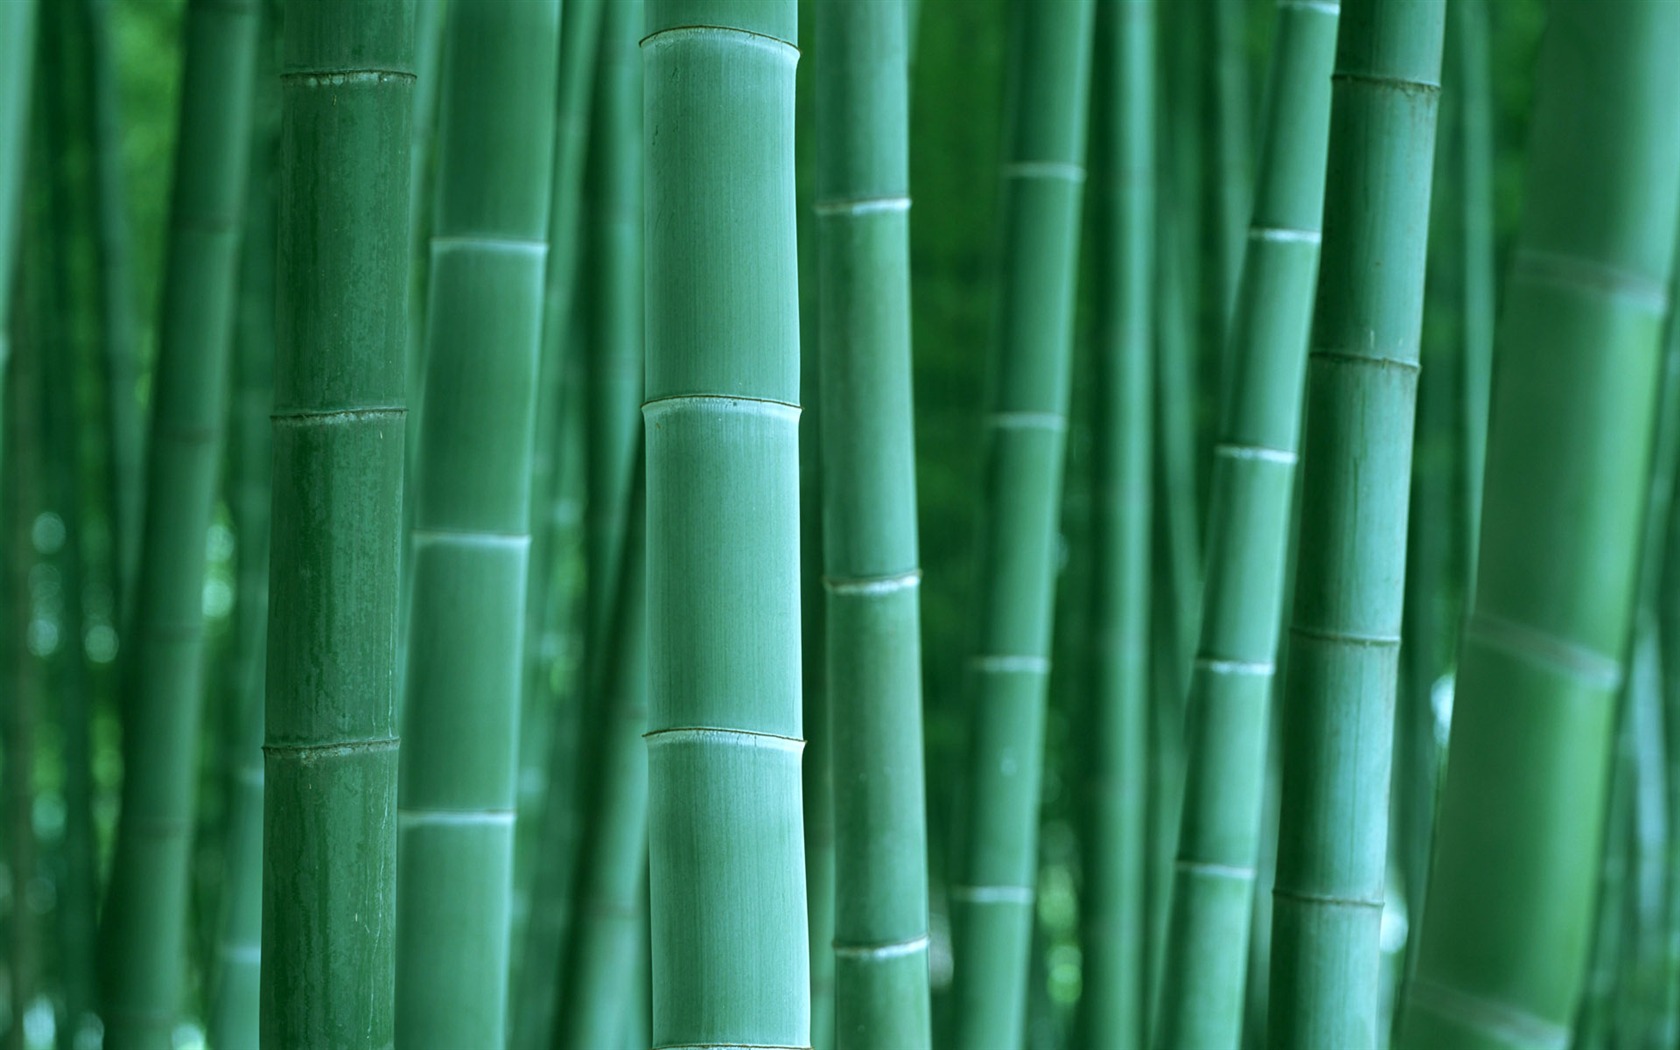 Fond d'écran de bambou vert albums #2 - 1680x1050